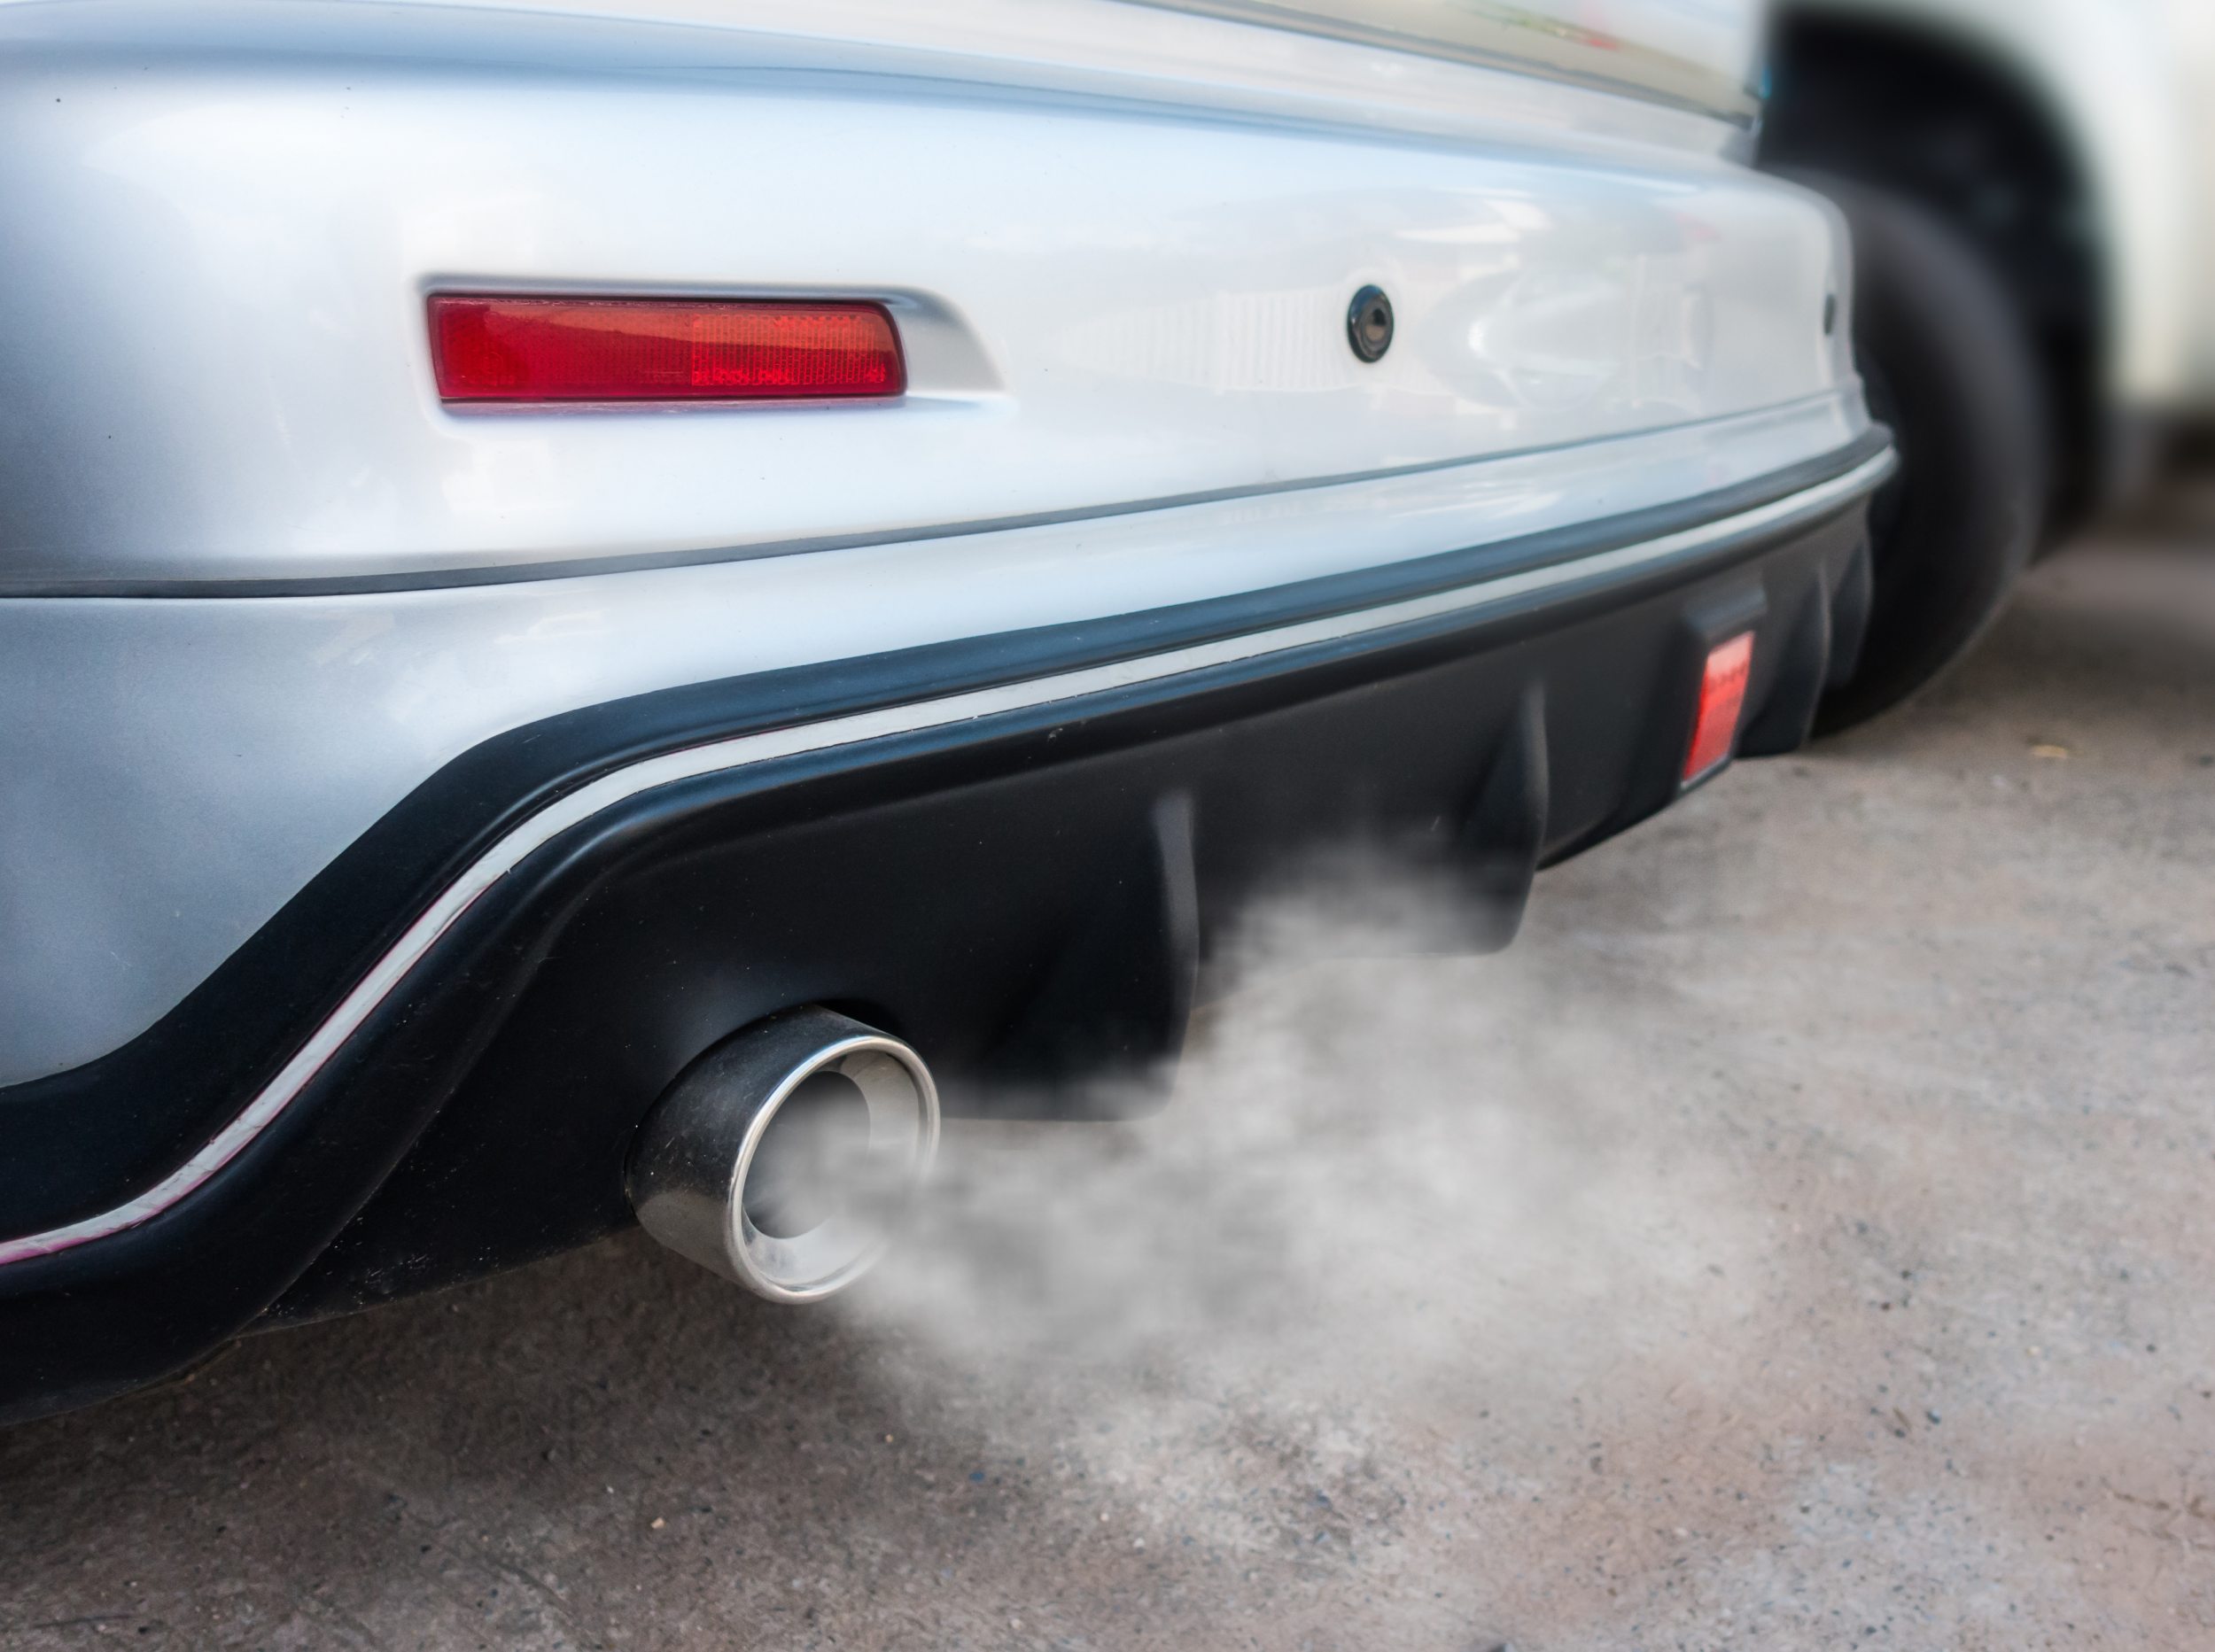 Gás tóxico mortal do veículo: de onde ele sai e o que ele causa?